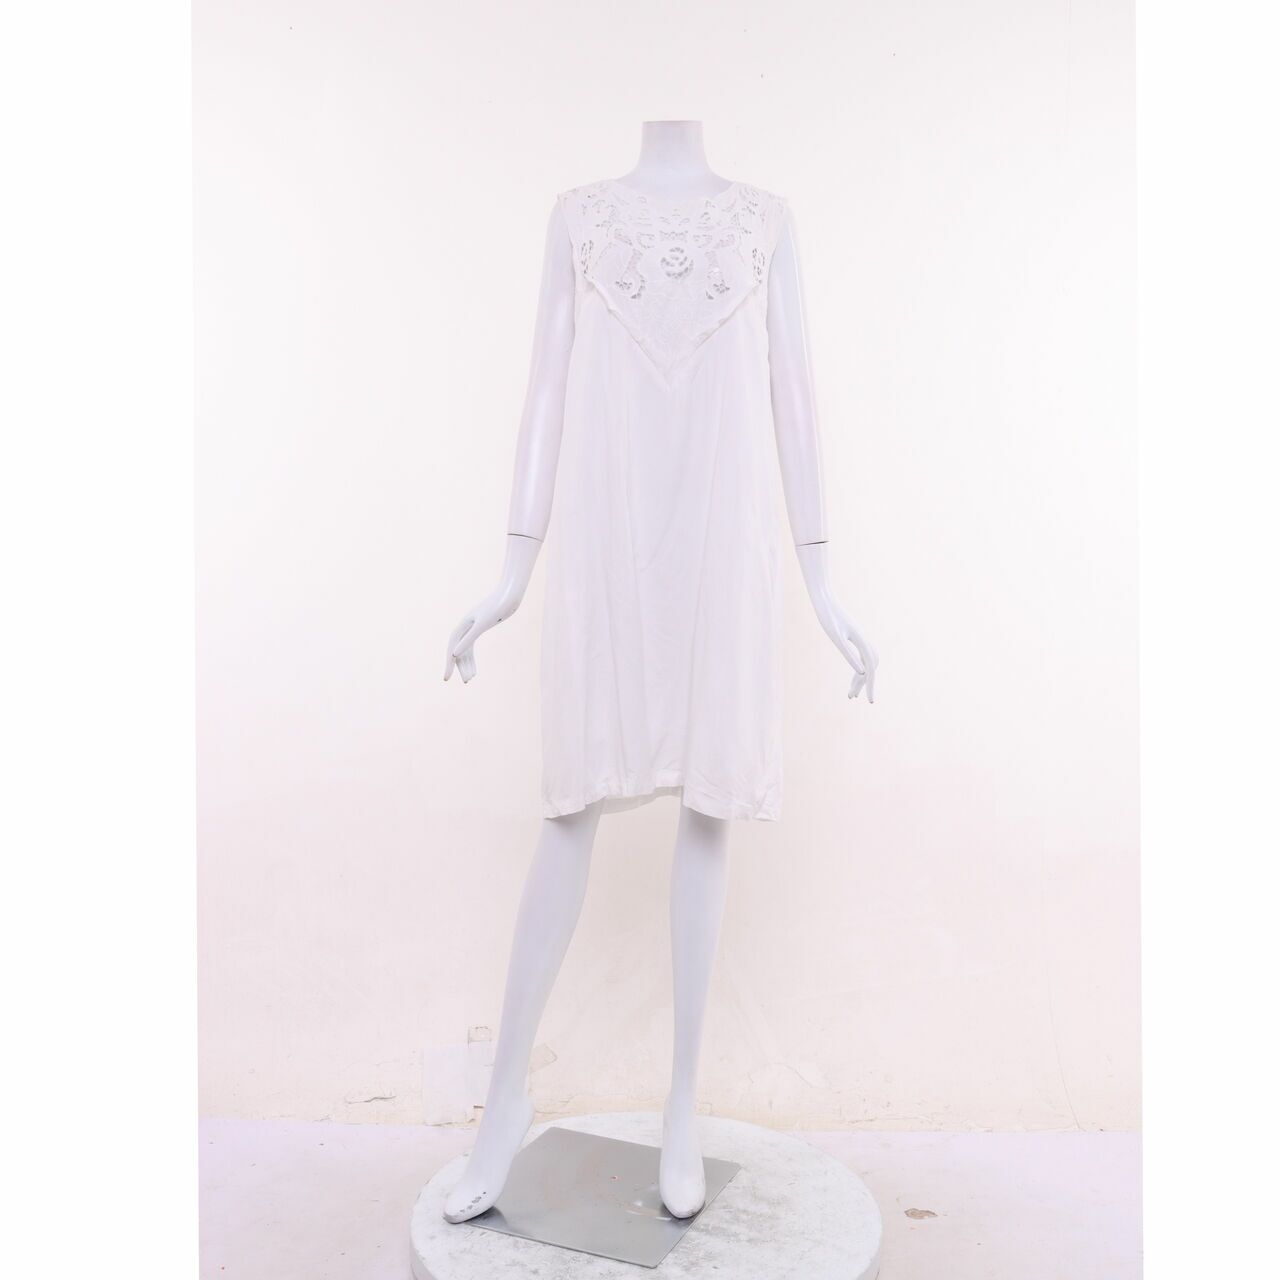 Uluwatu White Mini Dress